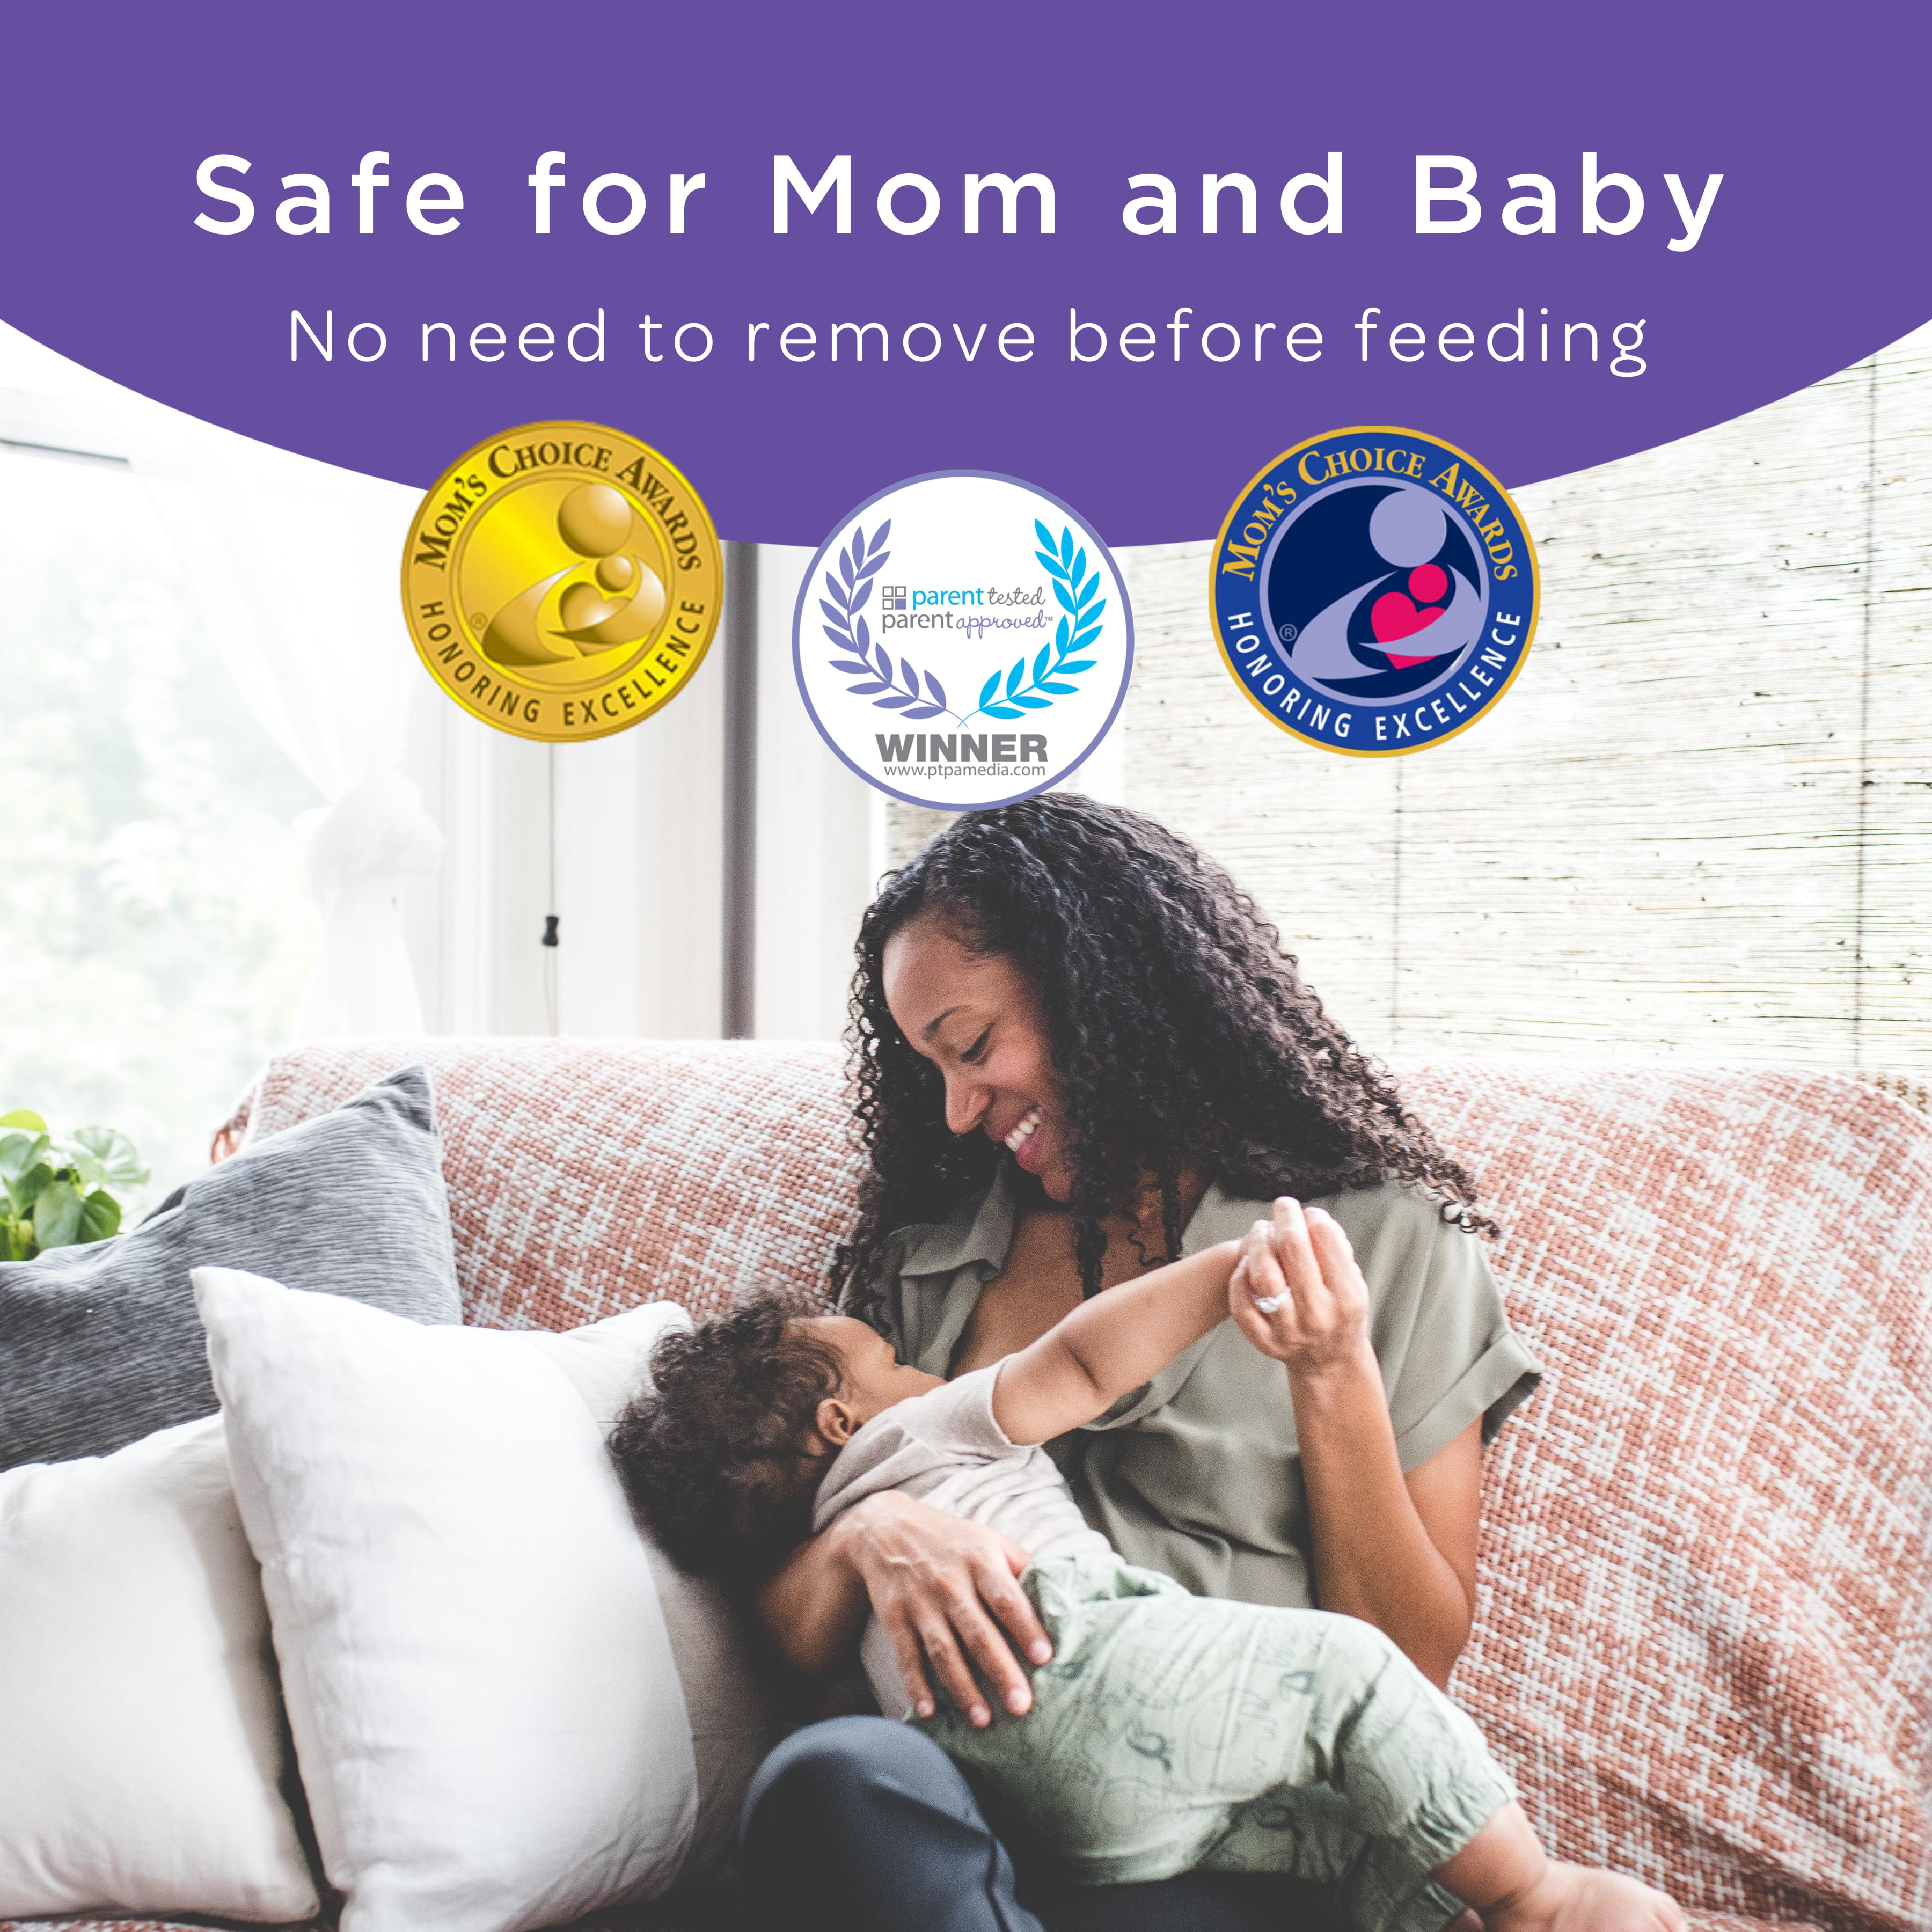 Breastfeeding Products: 25 Every Nursing Mama Needs! - Applecart Lane